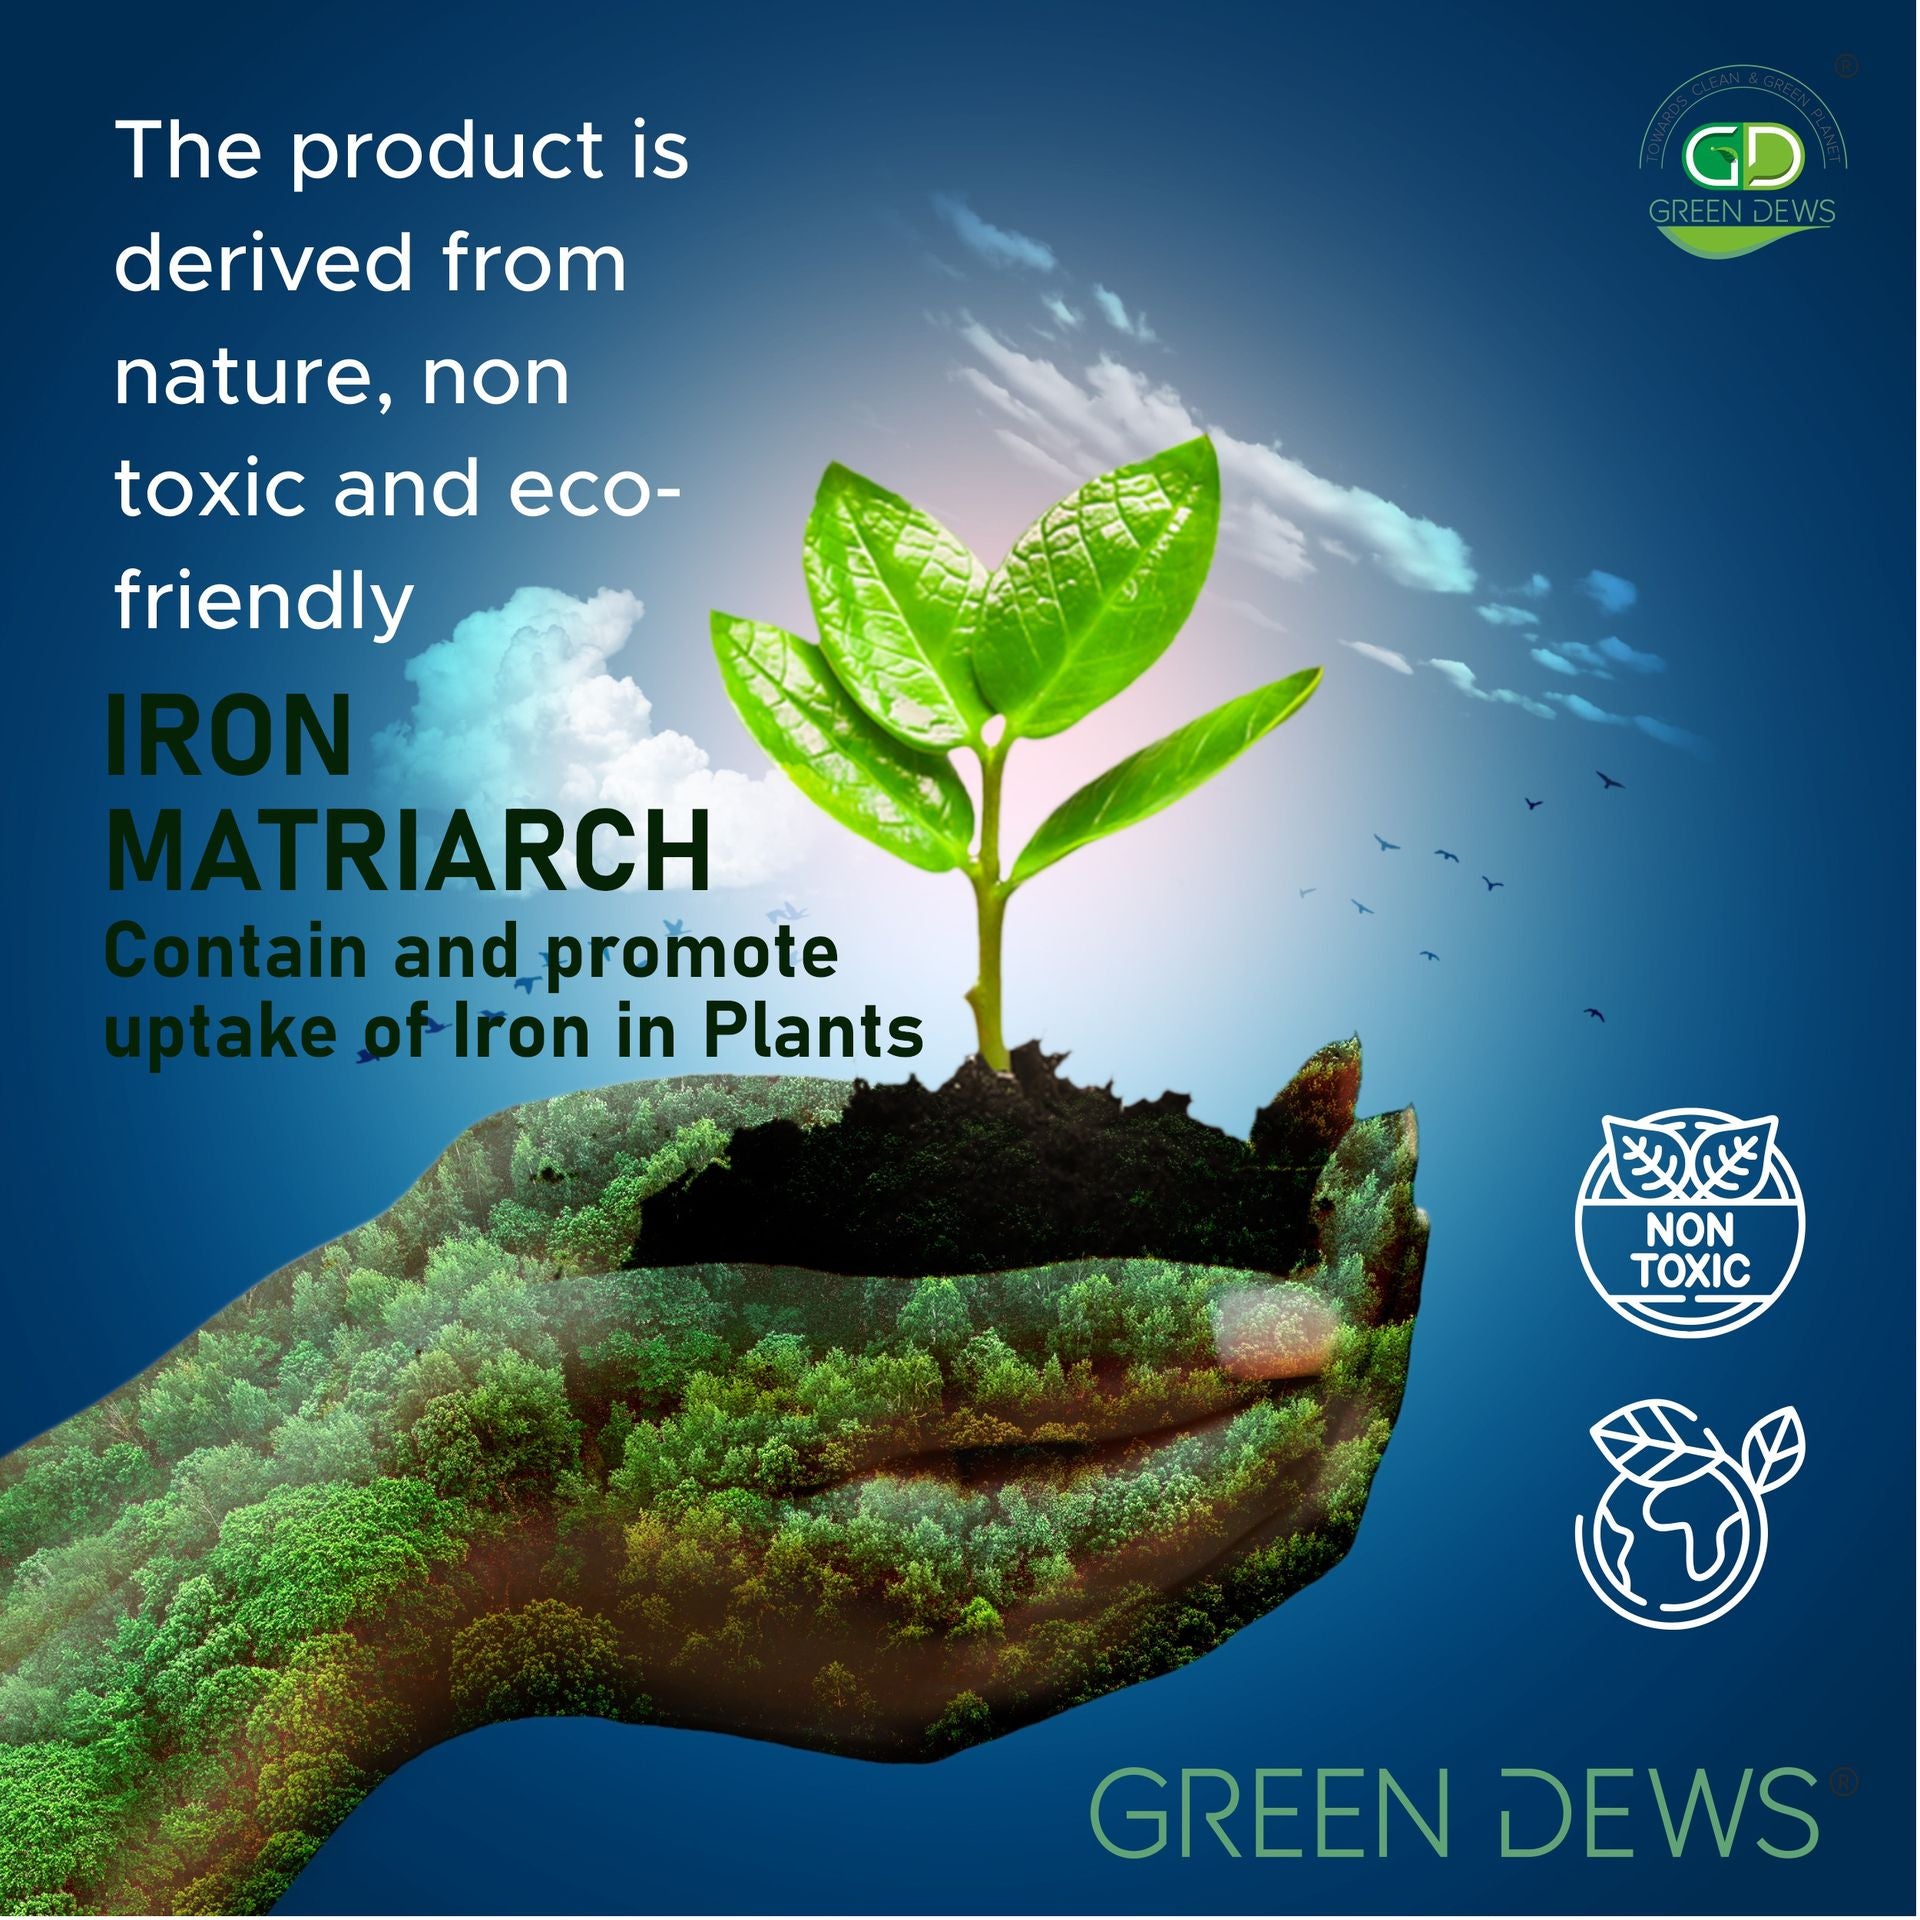 Green Dews IRON FERTILIZER FOR PLANTS ORGANIC LIQUID WATER SOLUBLE IRON MATRIARCH FOLIAR SPRAY substitute of - Iron -Fe EDTA Chelated Iron Dust Powder - hfnl!fe